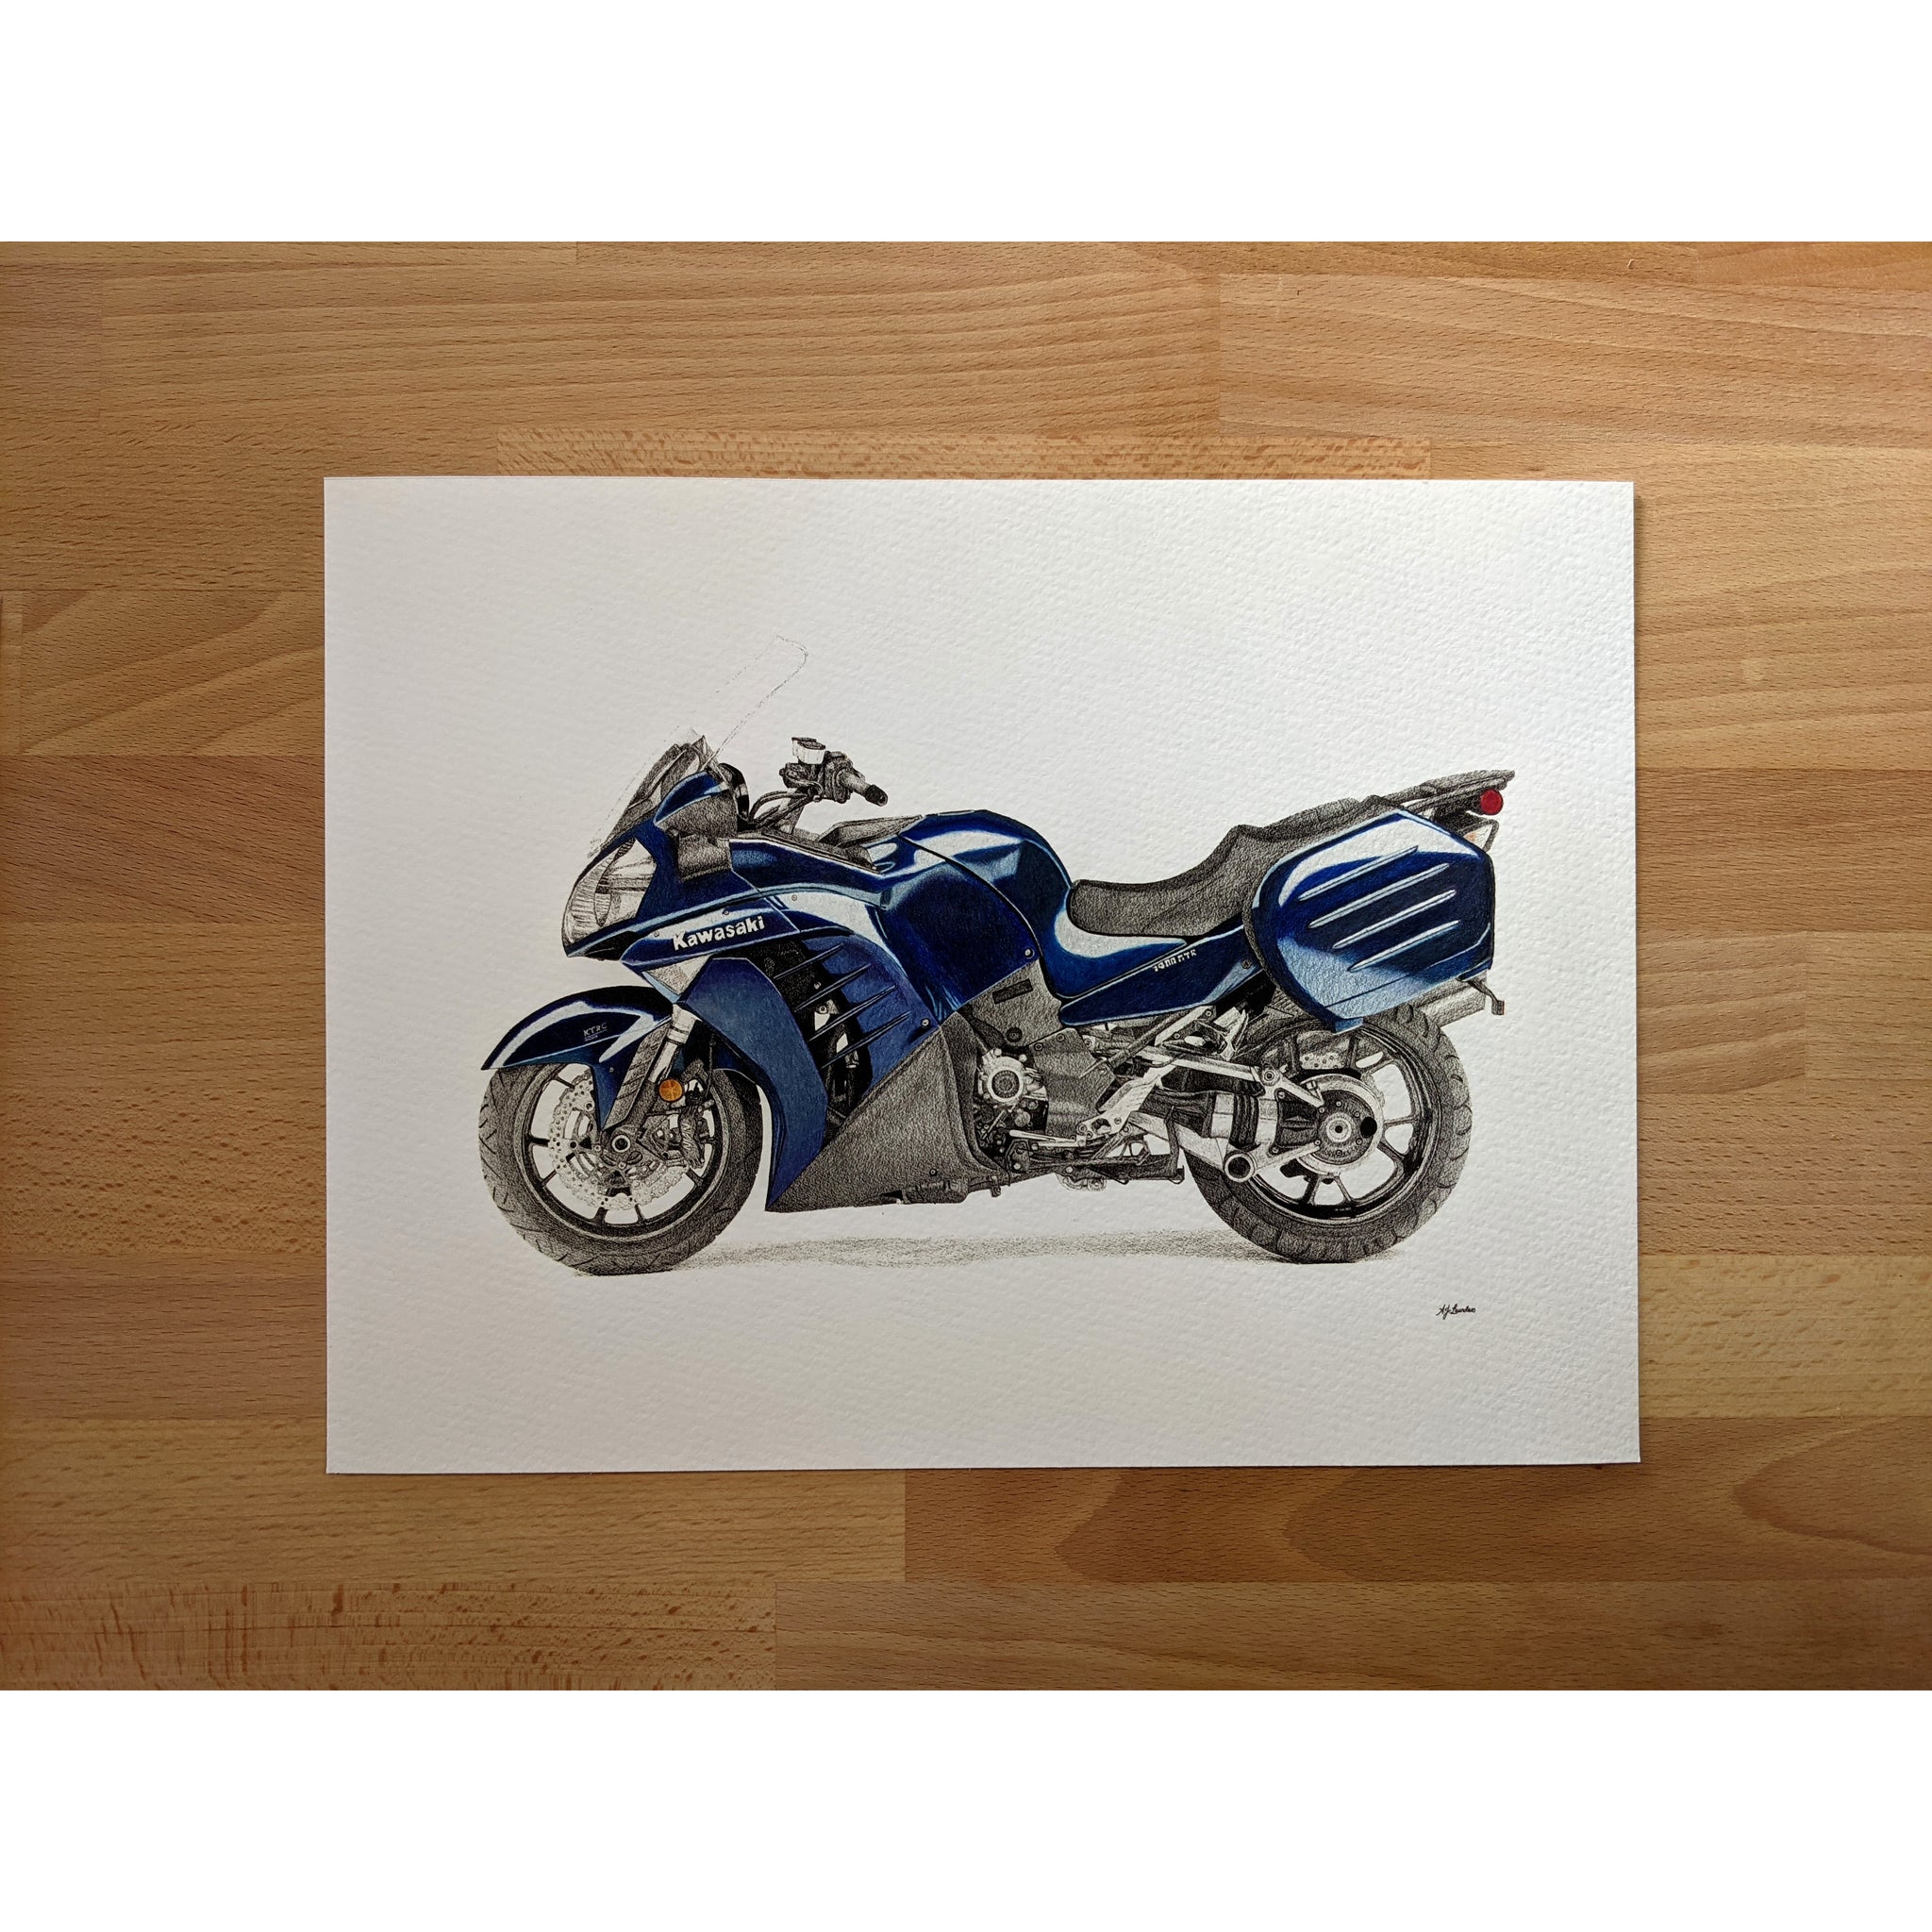 Kawasaki GTR1400 art, Concours14 art print, original art Brisbane Australia by AJ Laundess